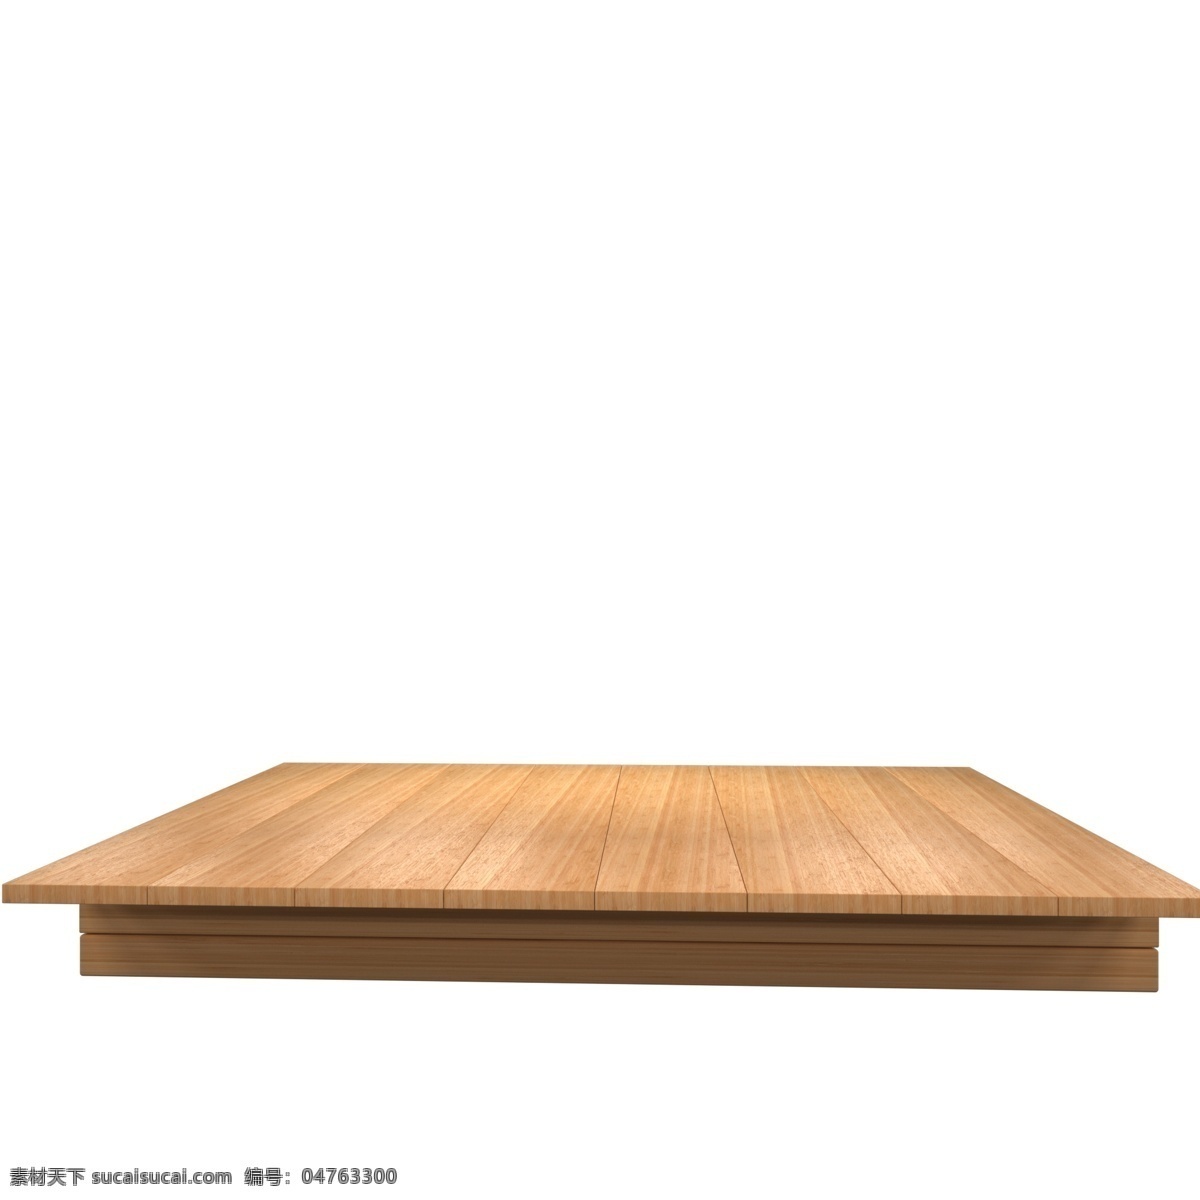 3d 写实 木质 地板 c4d 木板 仿真类木板 板子 箭头 指路牌 木质地板 仿真木板 木头 木纹板子